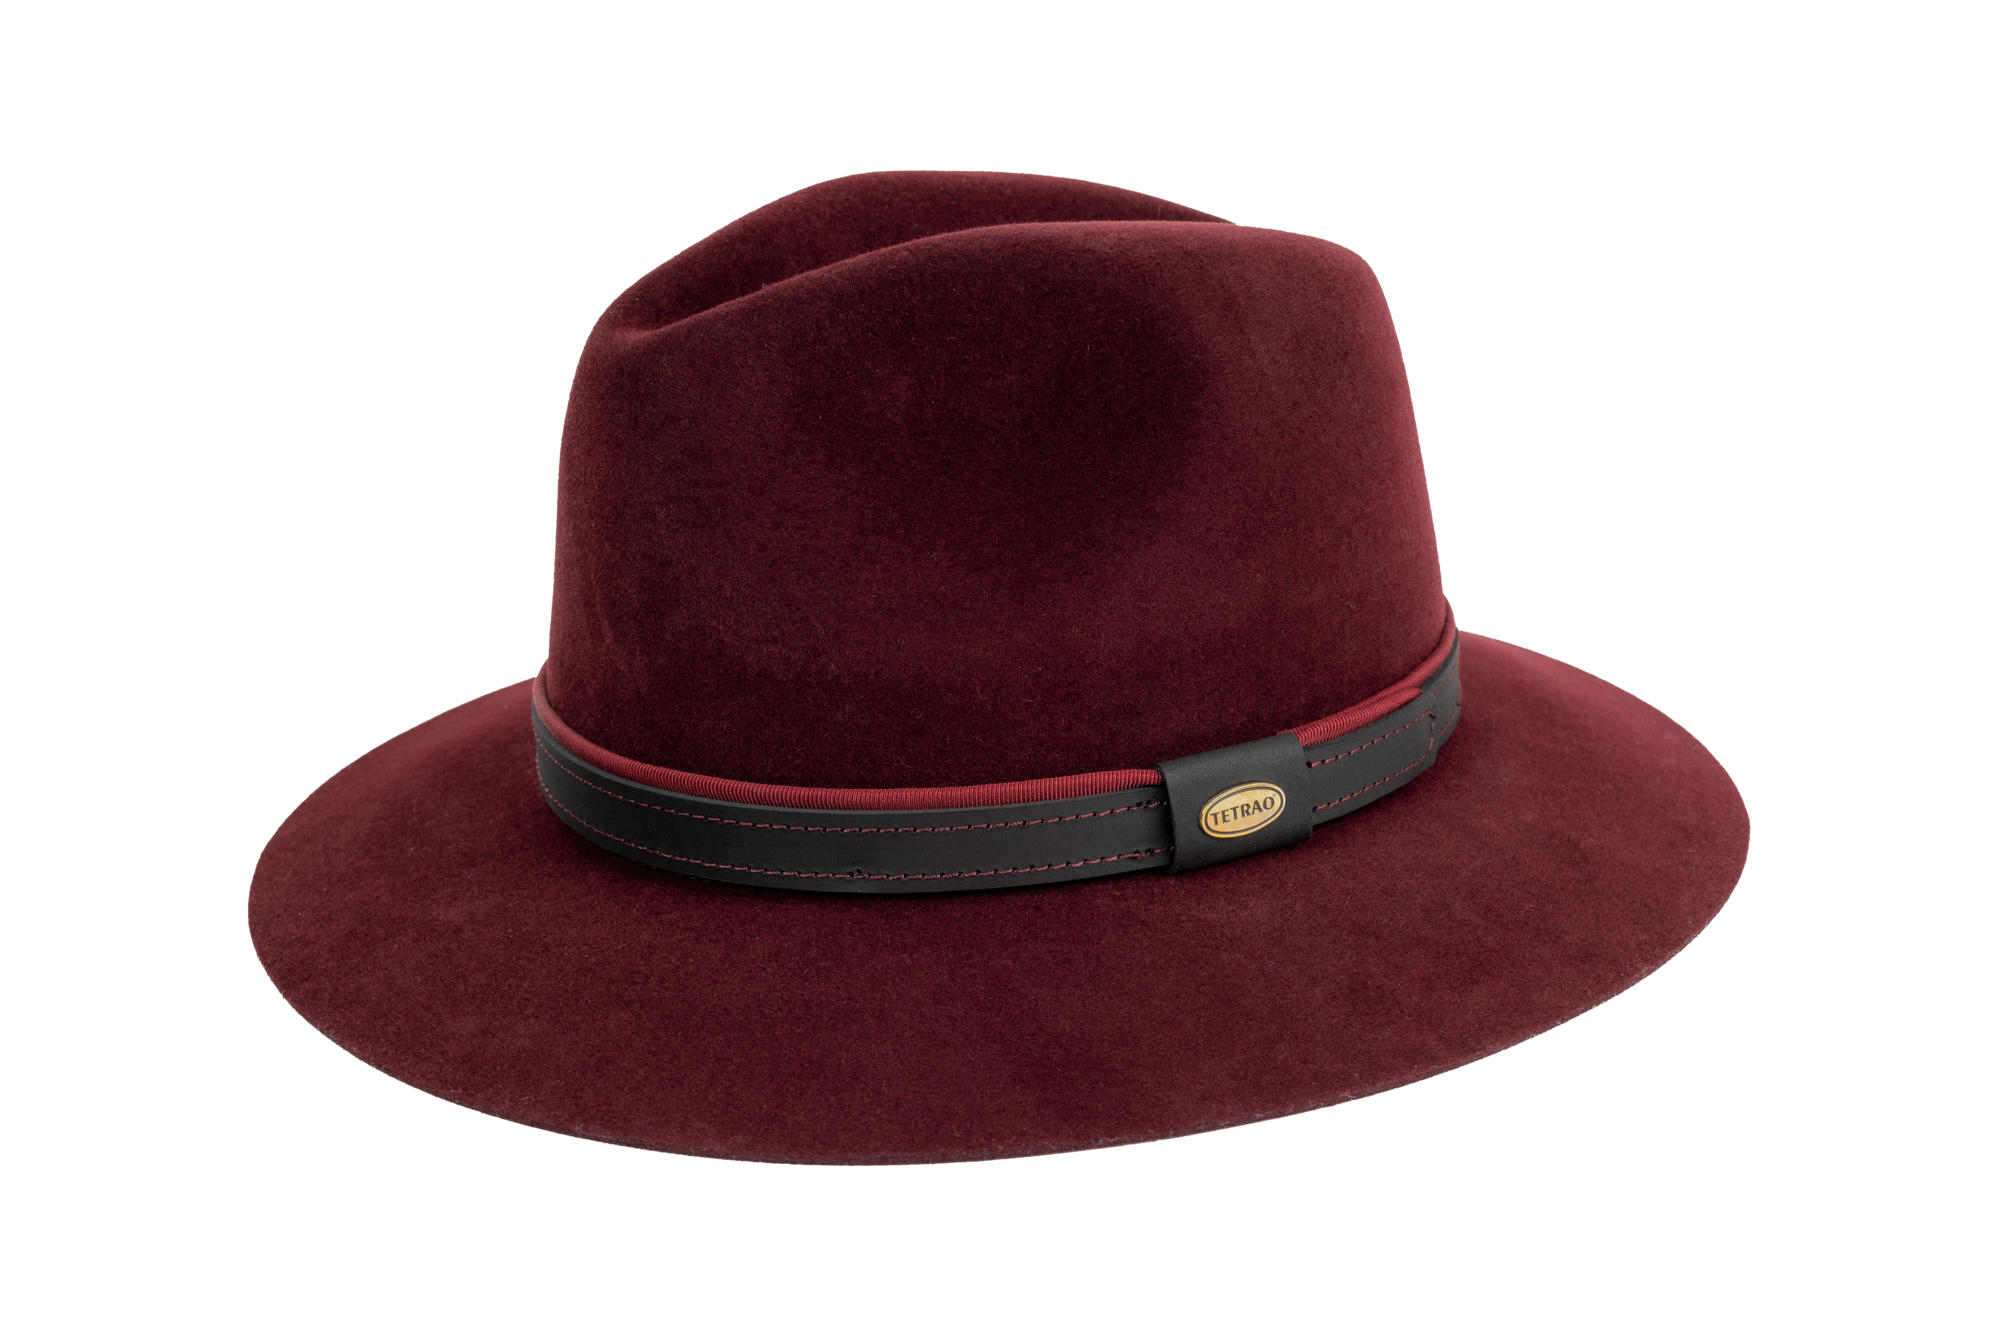 Poľovnícky klobúk TETRAO Exclusive zajac - bordó  56